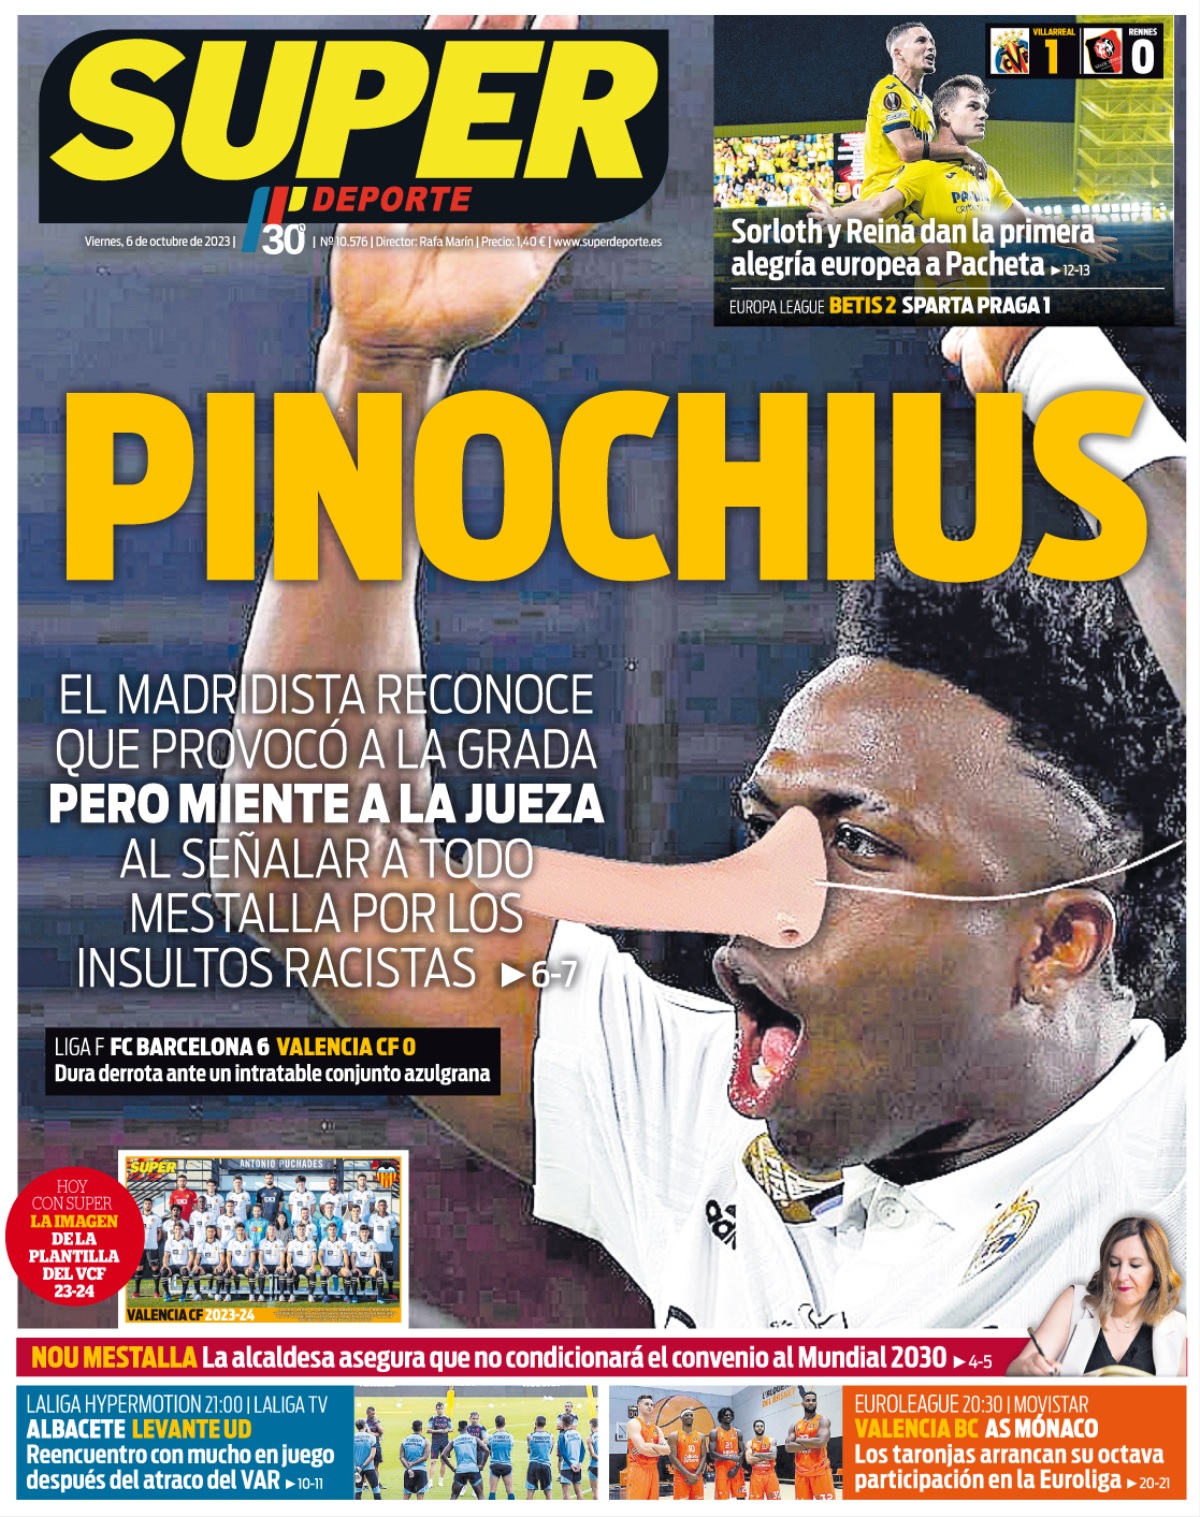 'Pinochius': La polémica portada de un diario español a Vinicius Jr.